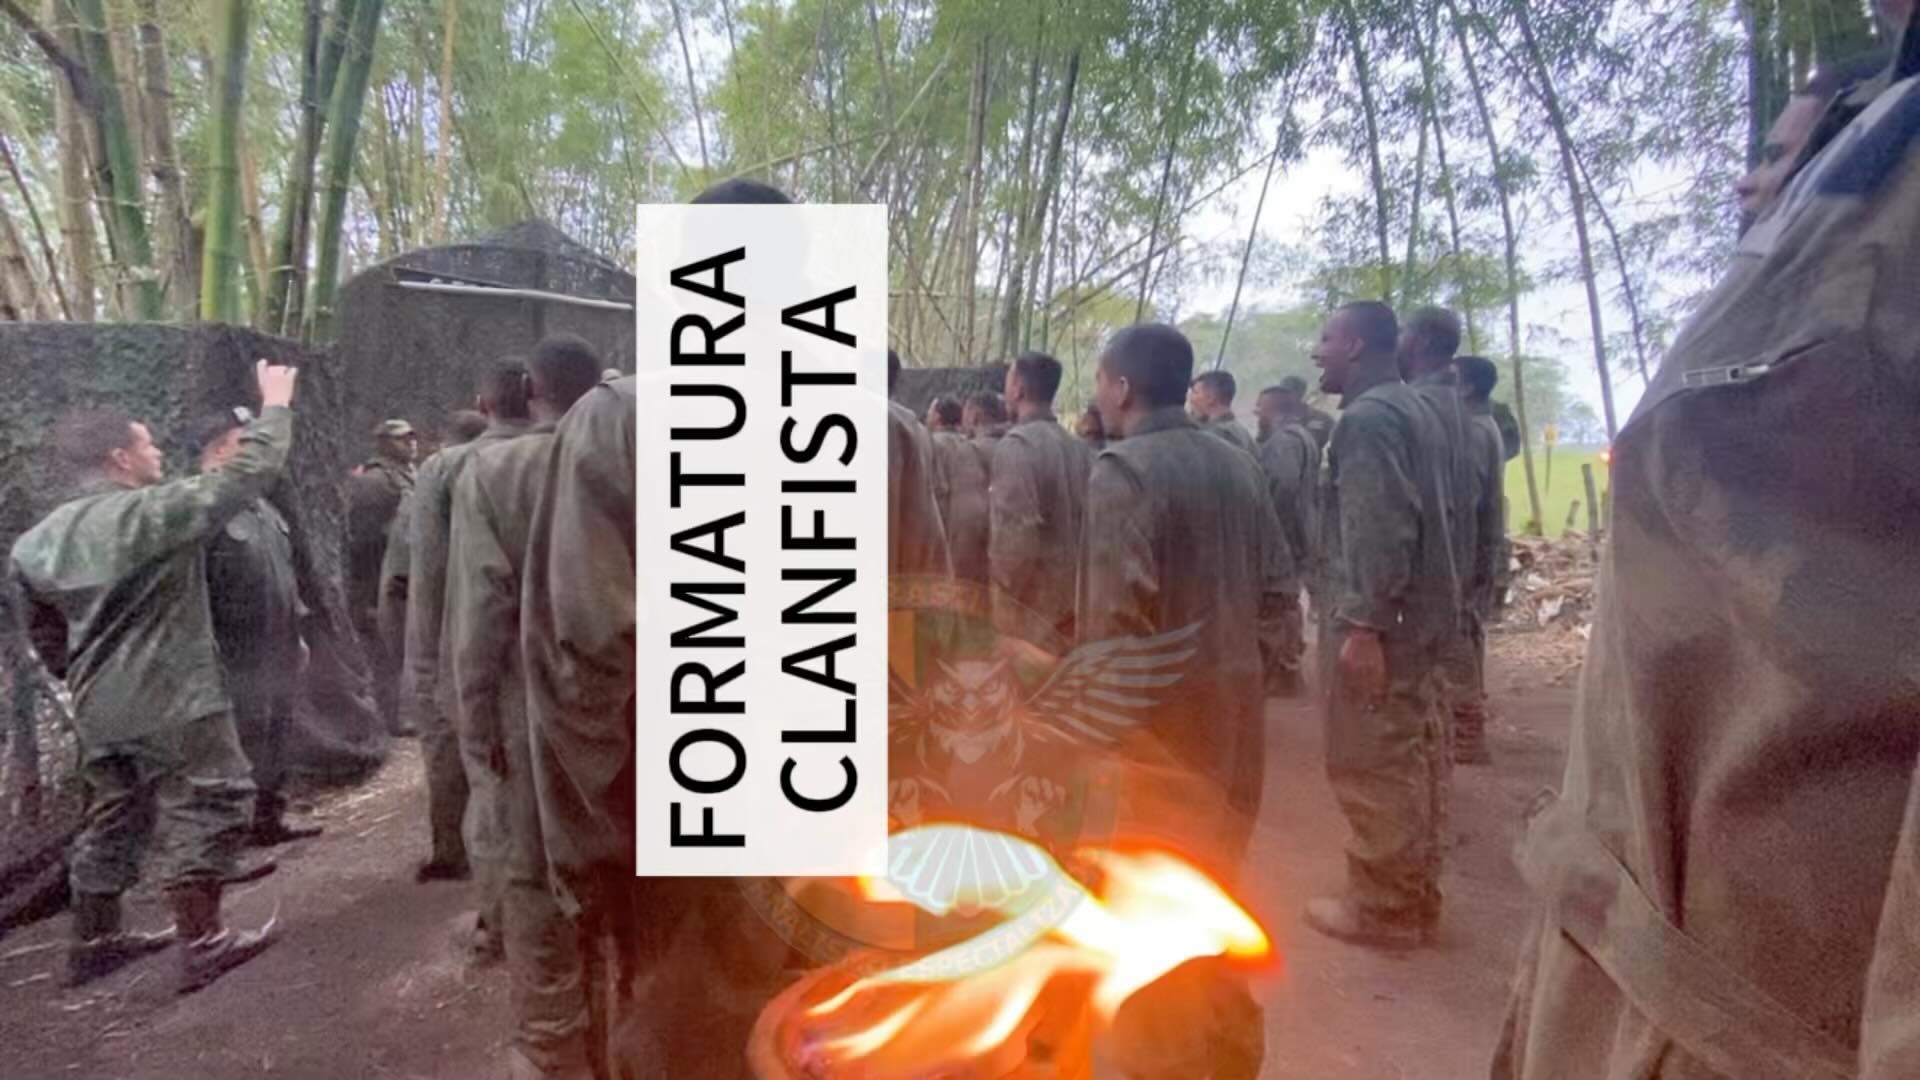 Cerimonial Clanfista- Fuzileiros Navais

A “reservada” formatura dos novos Clanf...